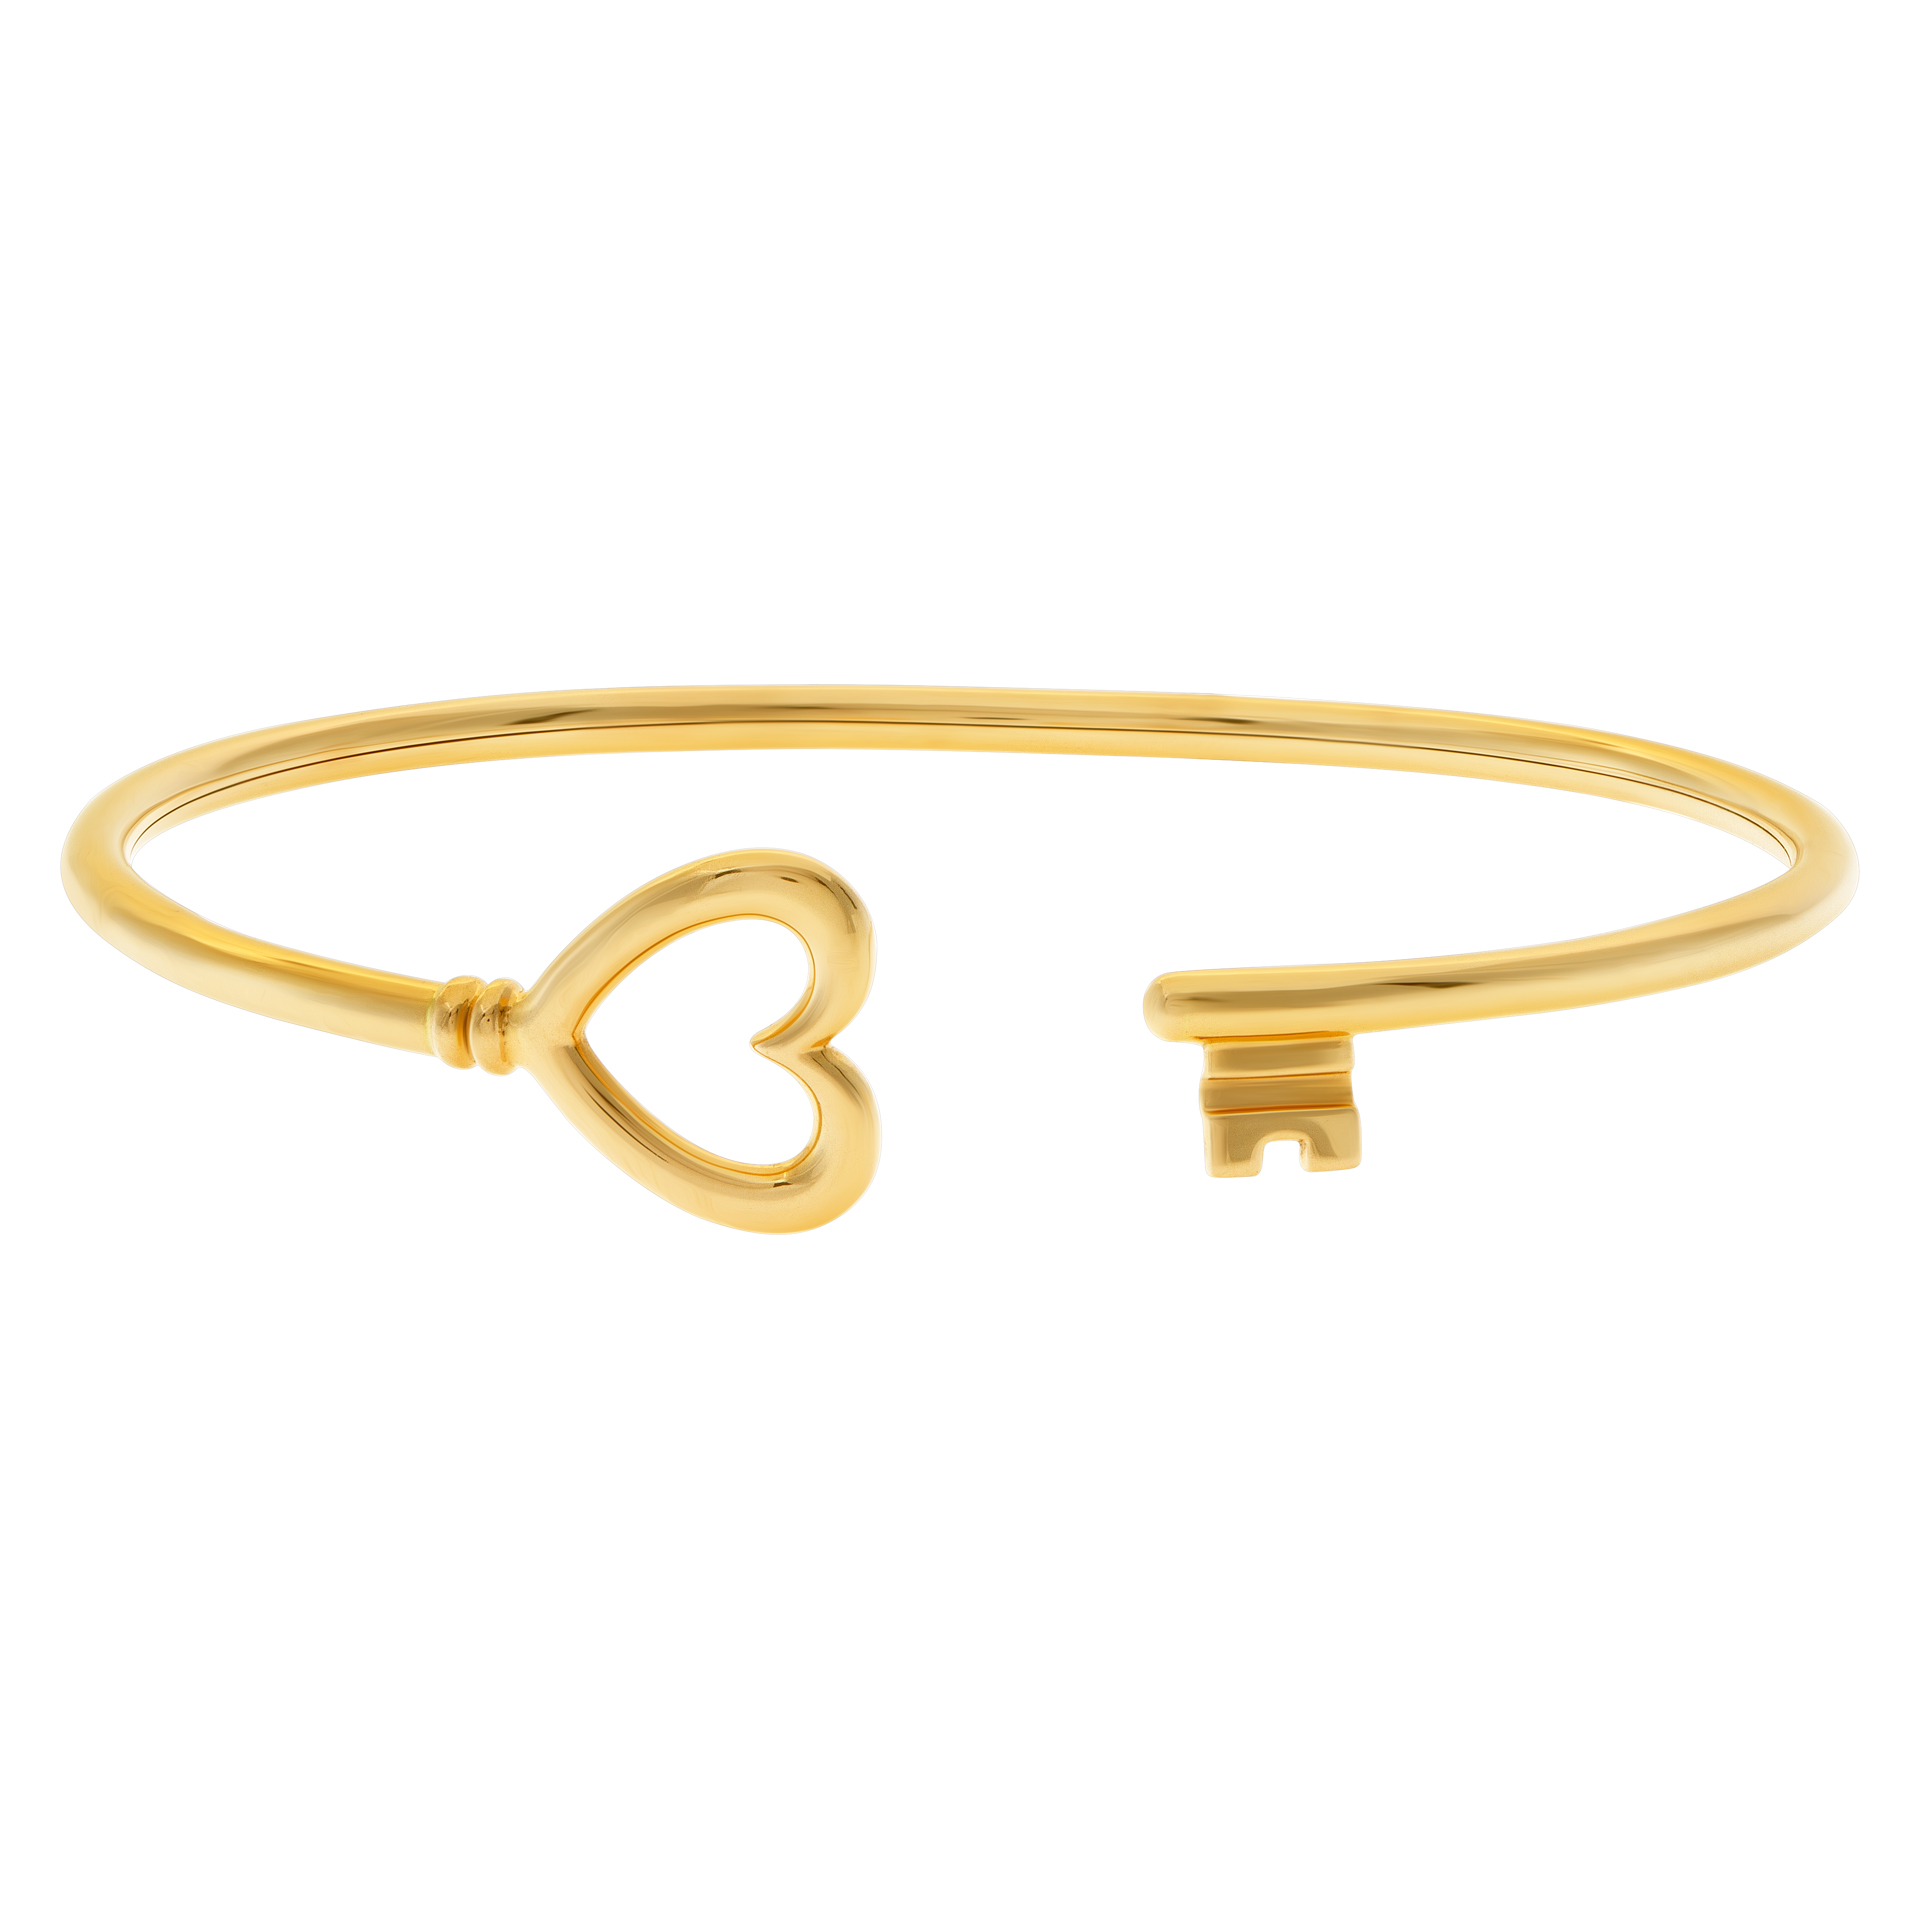 Tiffany & Co wire key bangle bracelet in 18k yellow gold